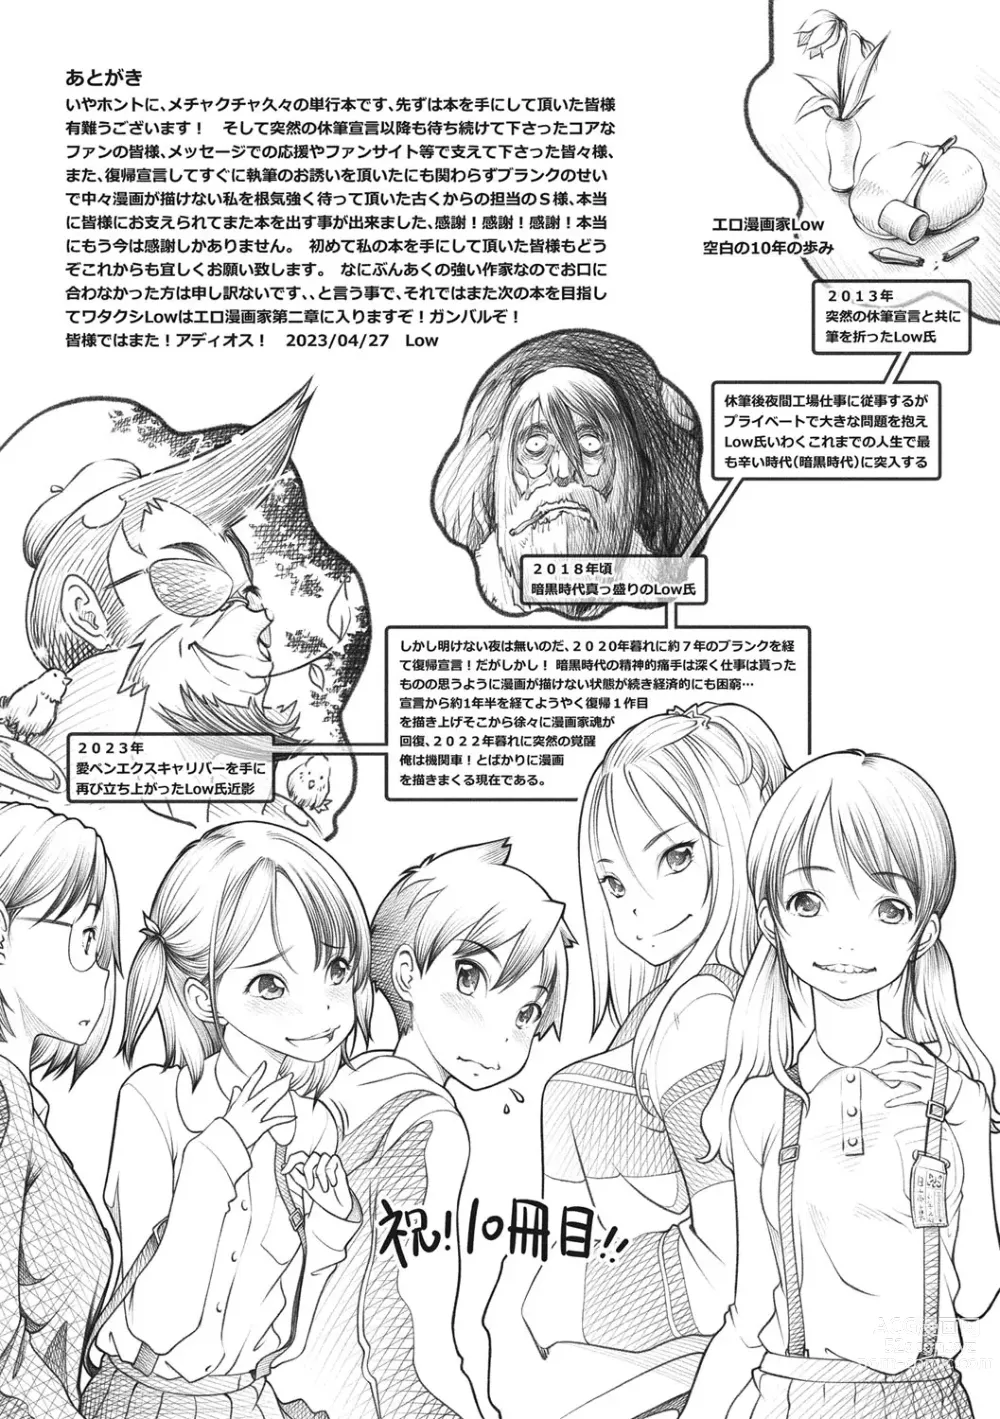 Page 178 of manga Namaiki-mori no 3 S